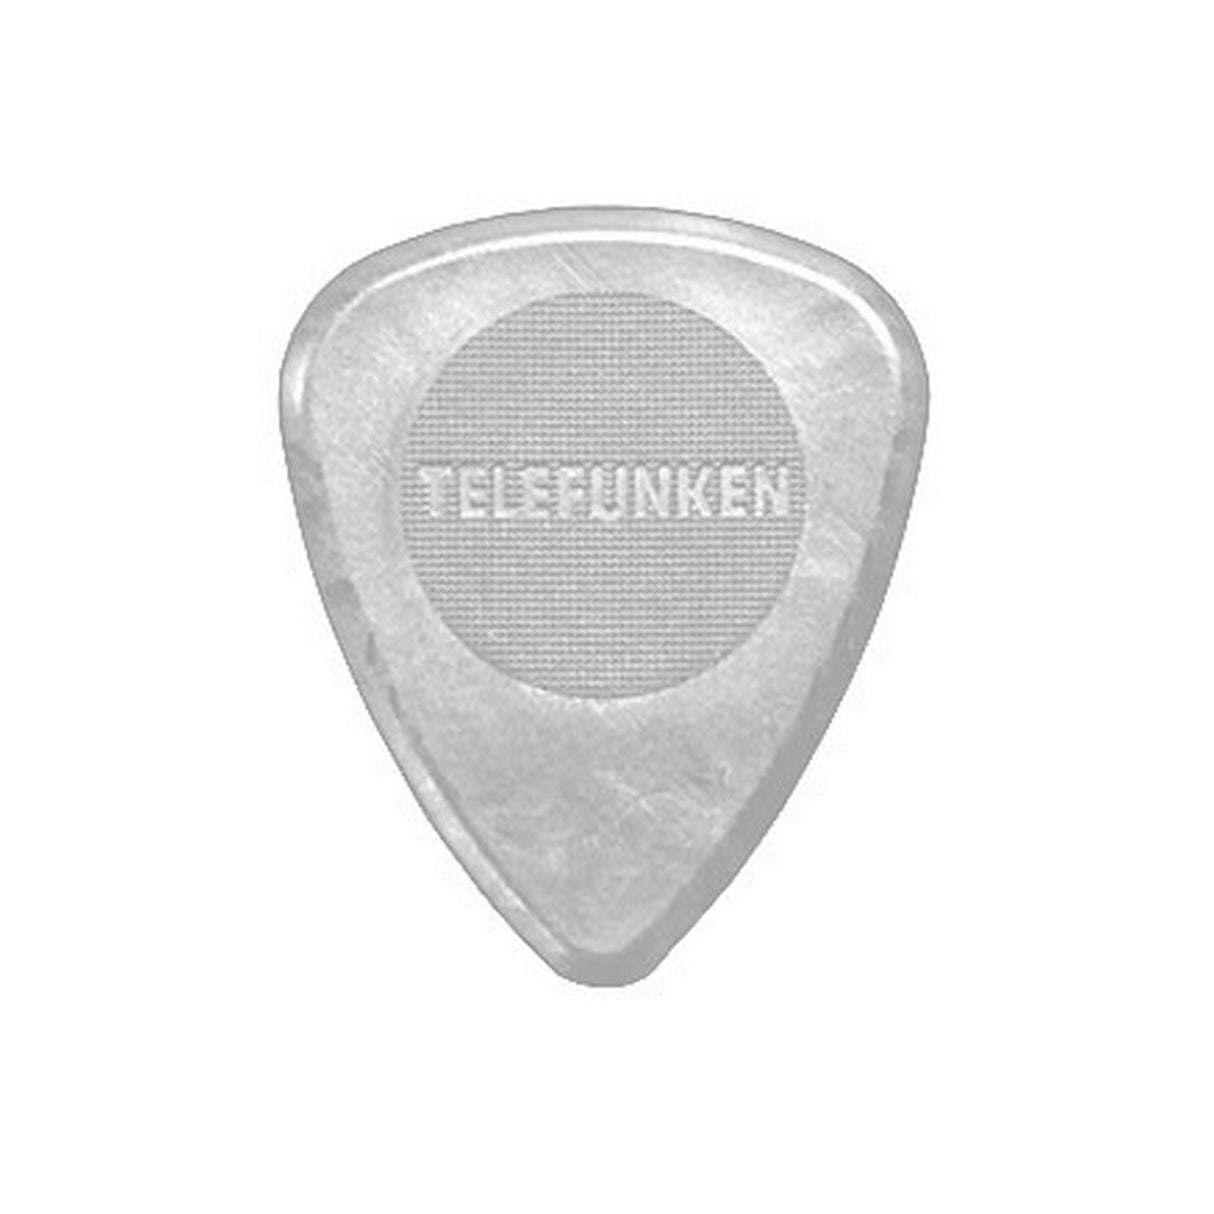 Telefunken 2mm Thick Circle Delrin Guitar Picks, White, 6-Pack